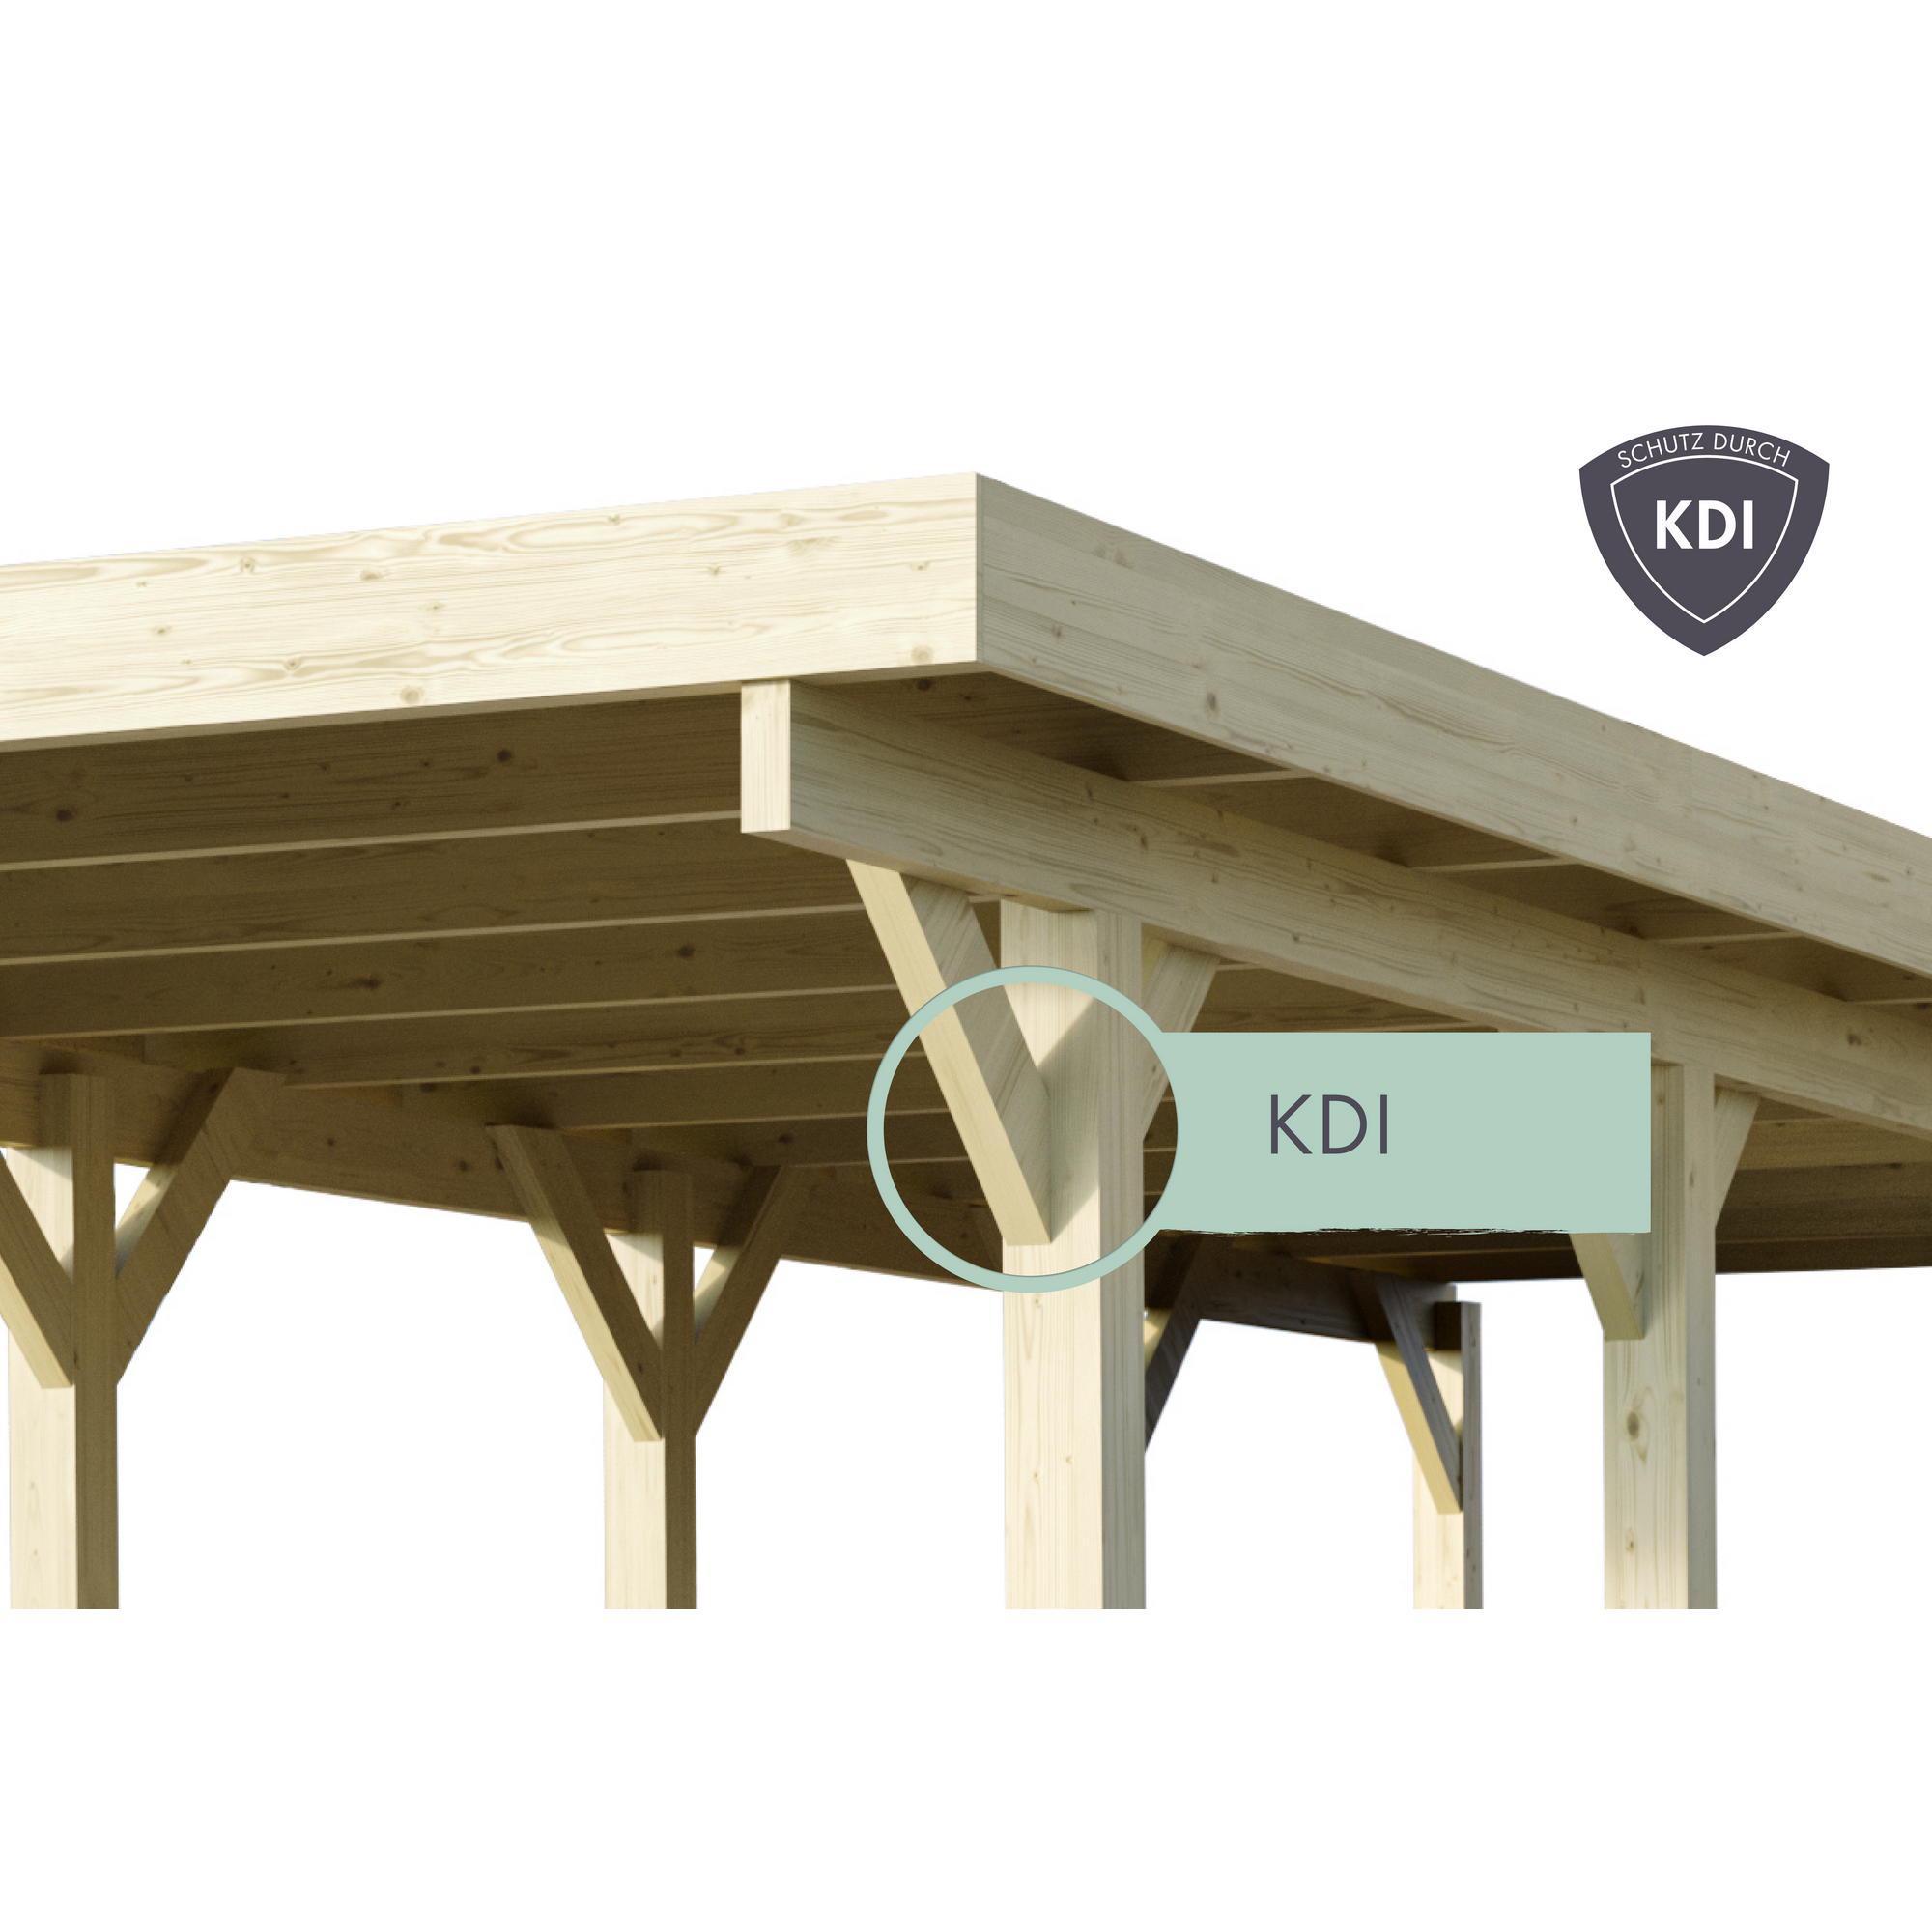 Doppelcarport 'Carlos 1' Kiefer PVC-Dach mit zwei Einfahrtsbögen 480 x 598 x 237 cm + product picture